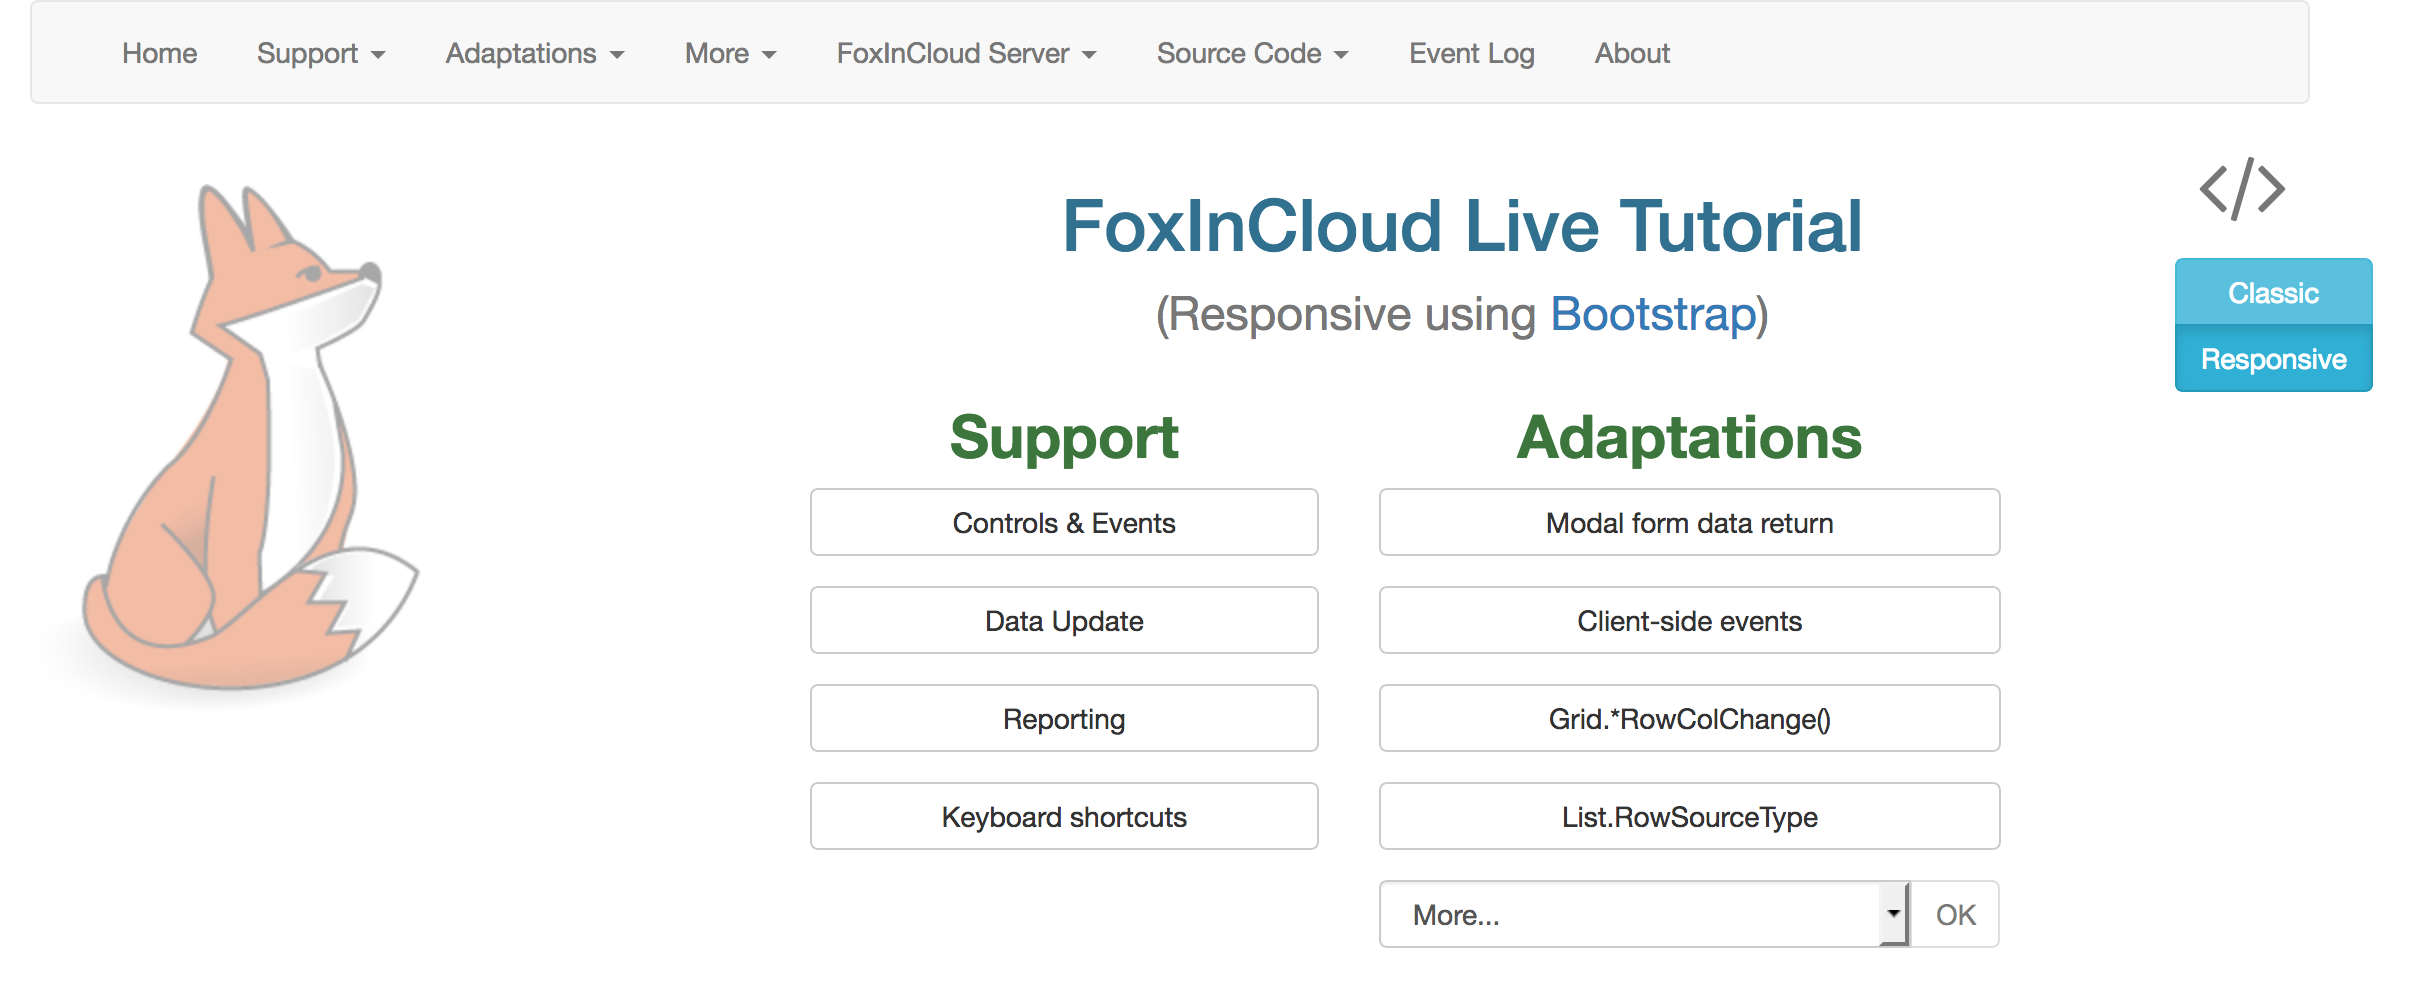 FoxInCloud Live Tutorial home, responsive mode